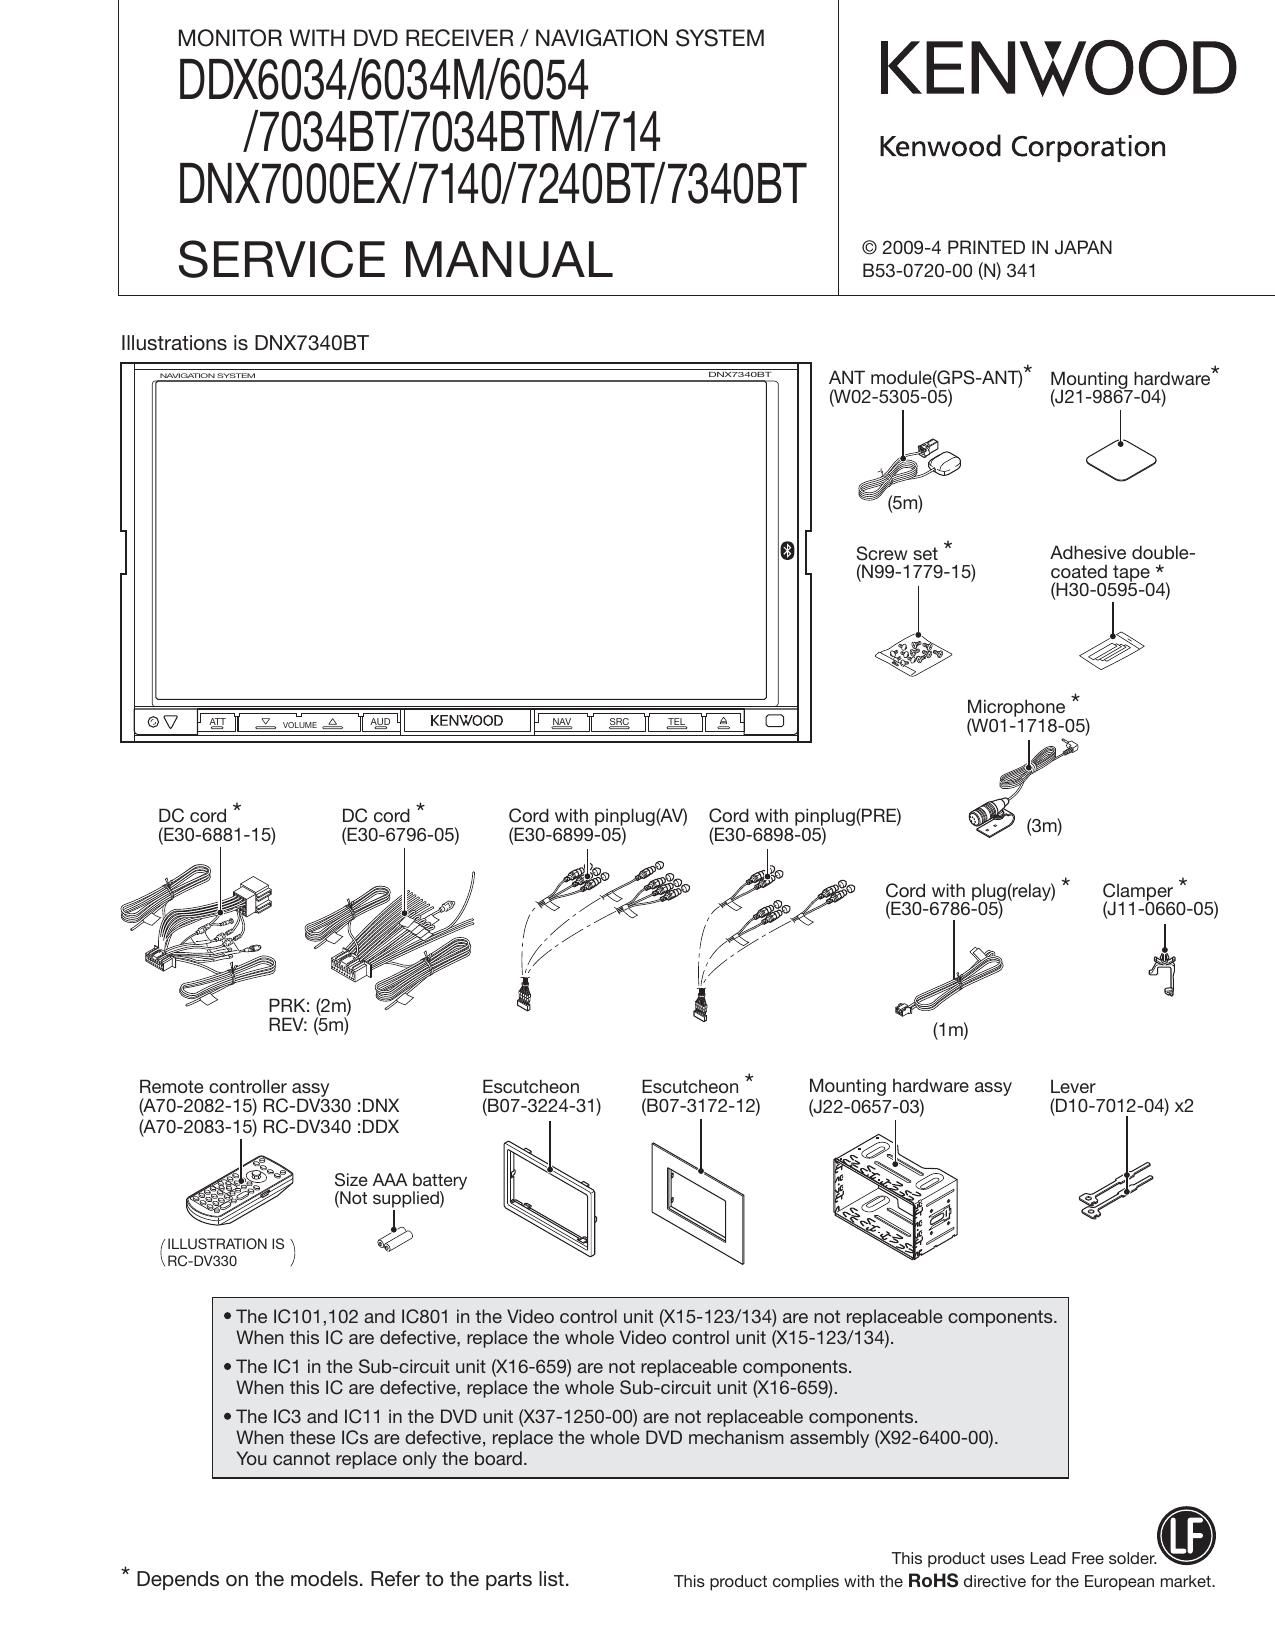 Kenwood DNX 7240 BT Service Manual